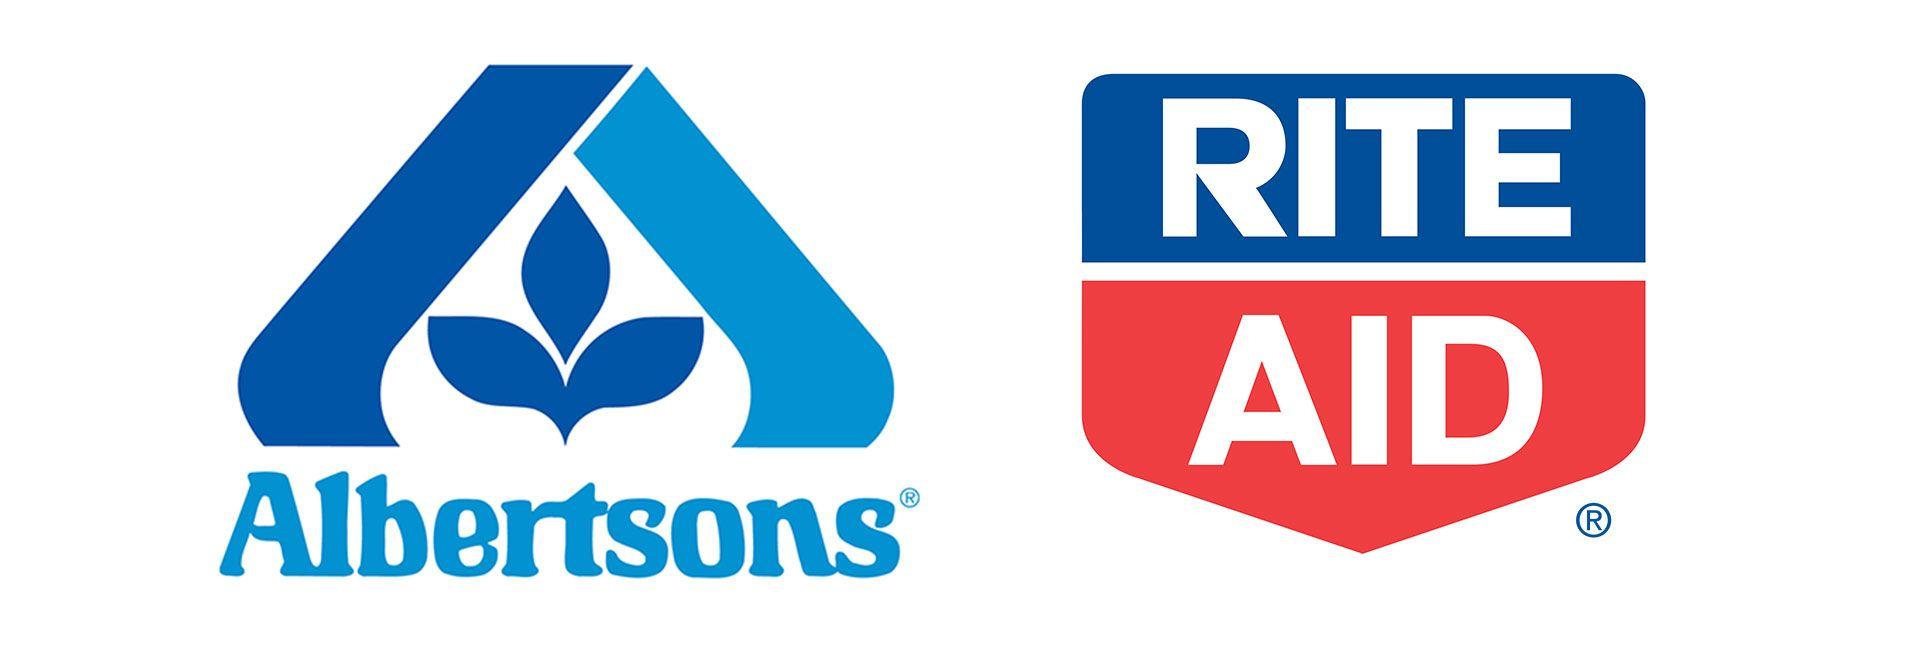 Rite Aid Logo - Albertsons, Rite Aid Merge